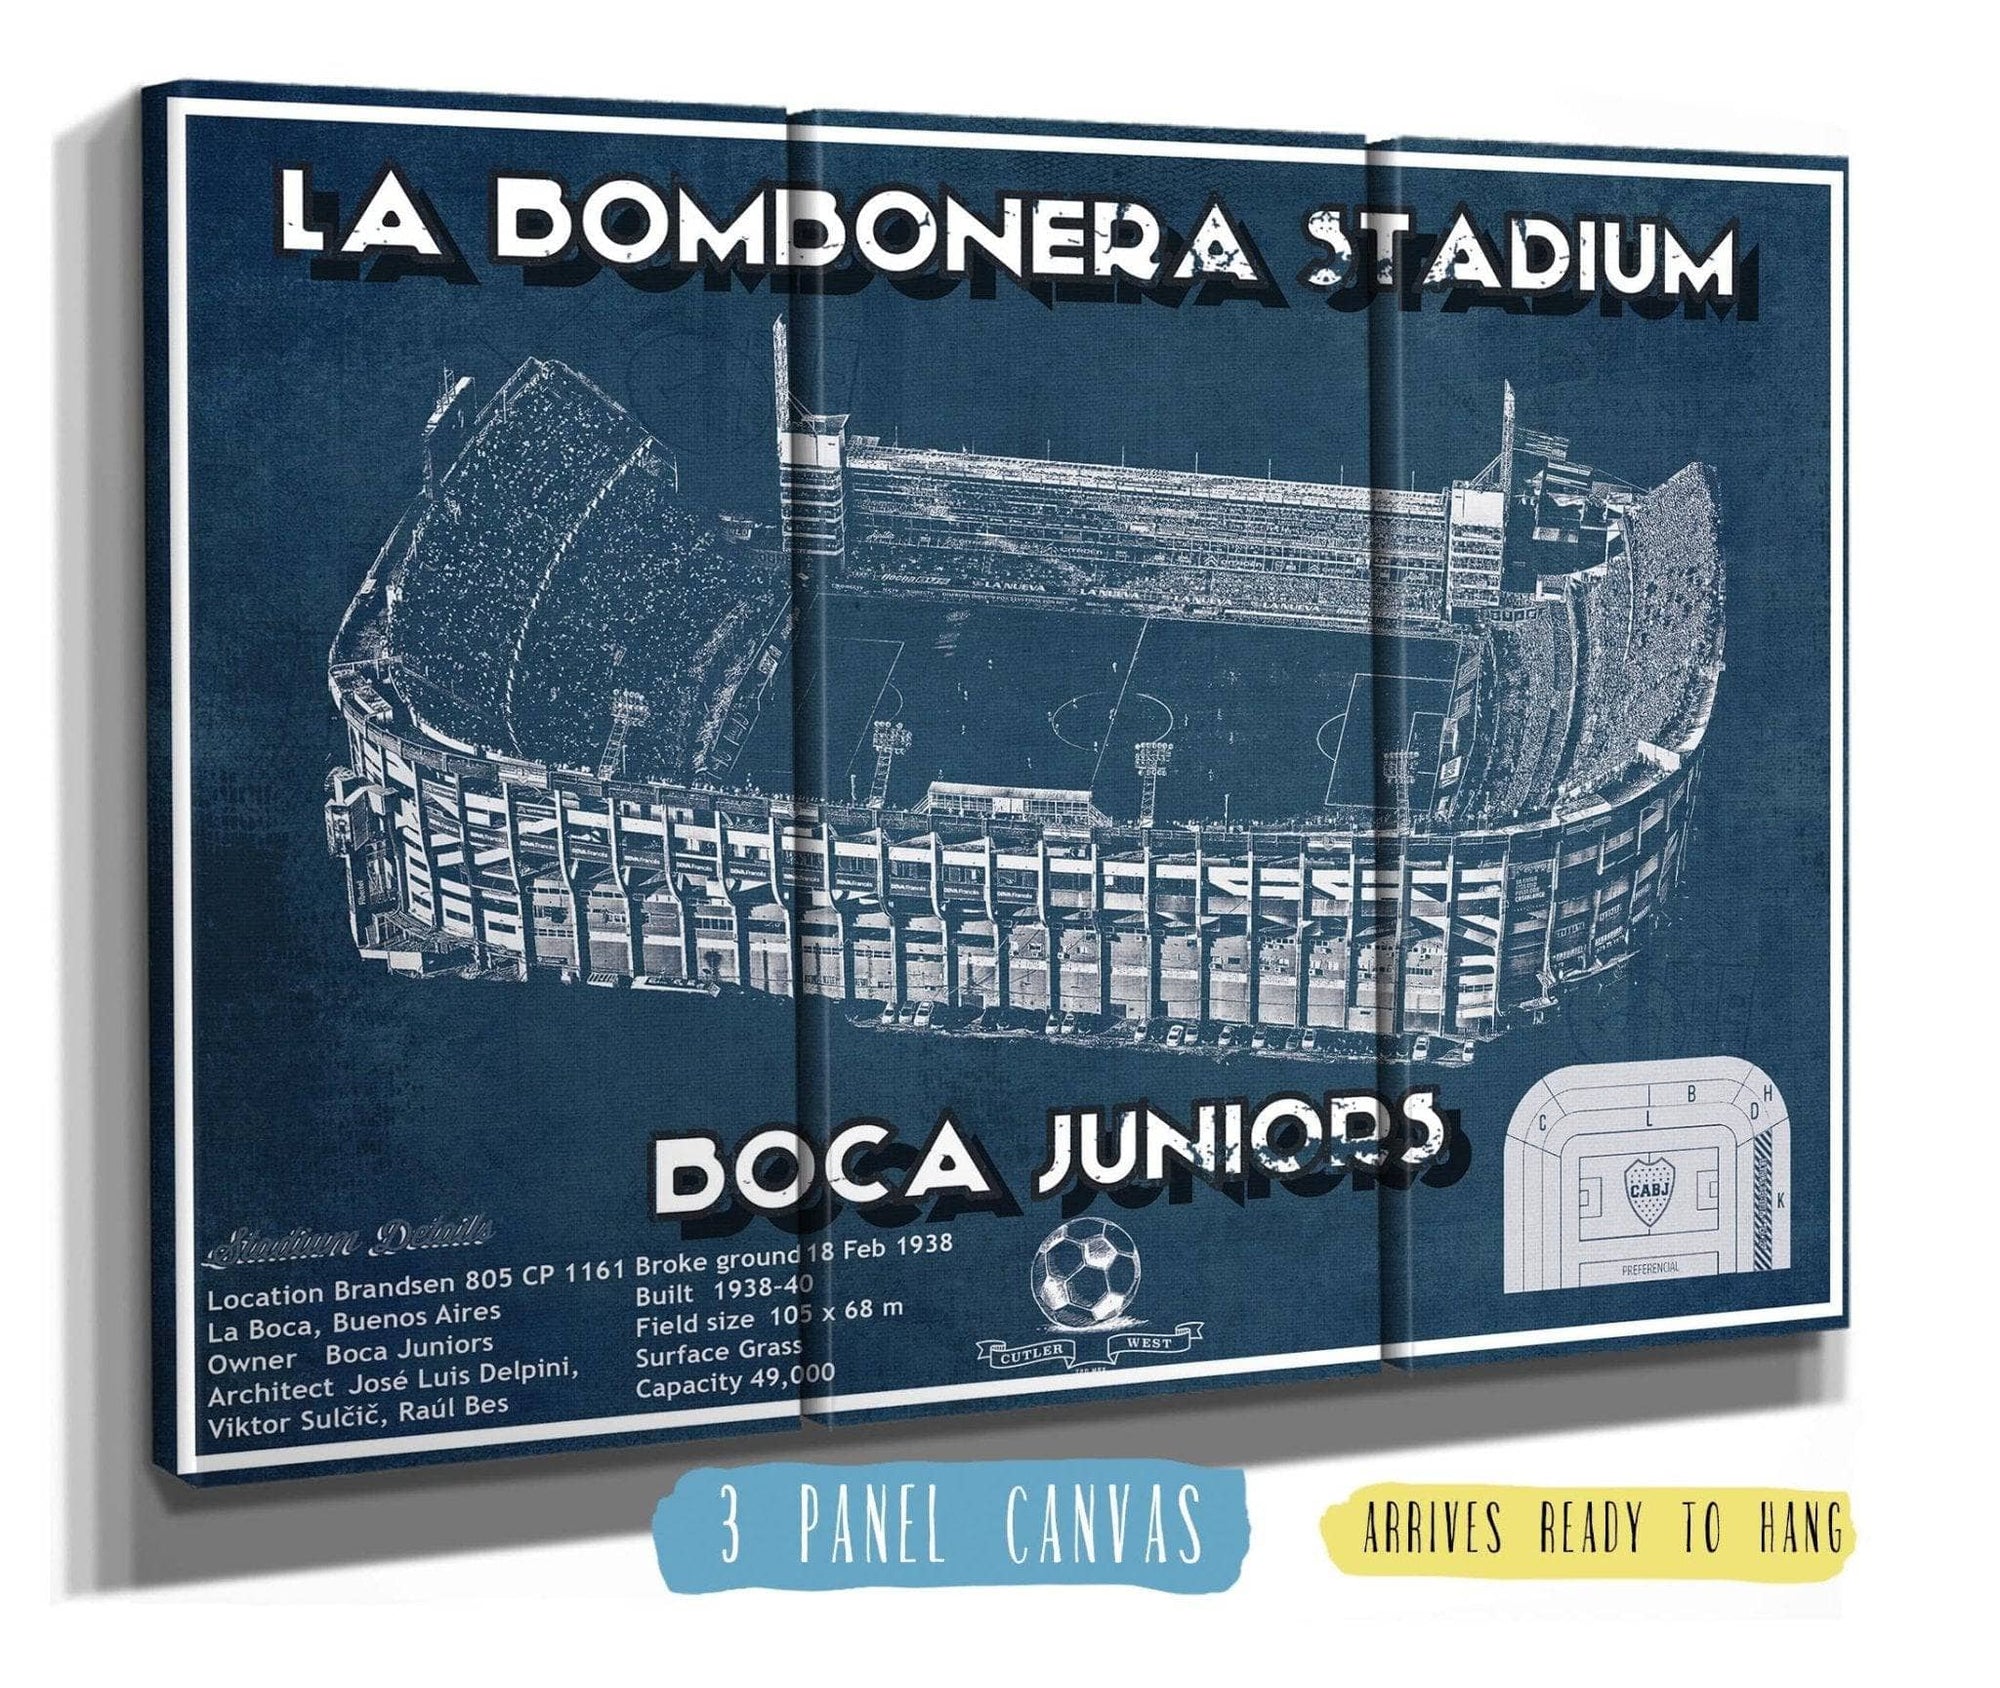 Cutler West Soccer Collection 48" x 32" / 3 Panel Canvas Wrap Boca Juniors F.C La Bombonera Stadium Soccer Print 2 734227953-TOP